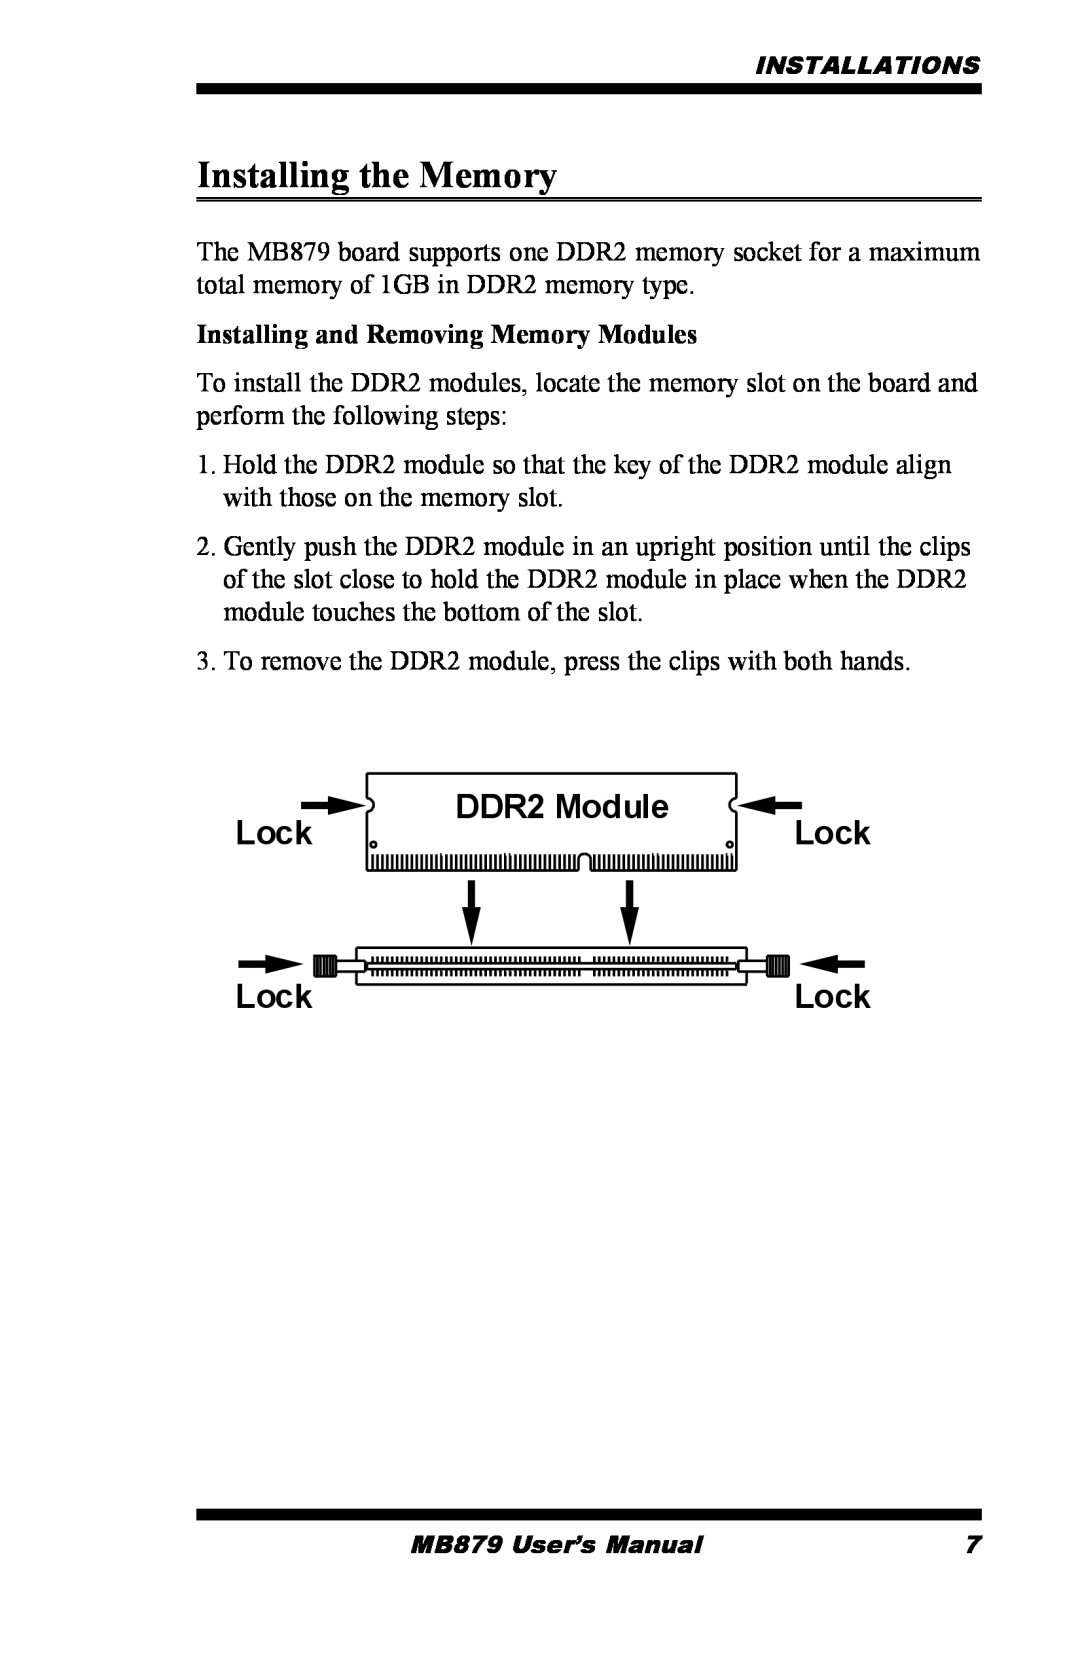 Intel MB879 user manual Installing the Memory, DDR2 Module, LockLock 